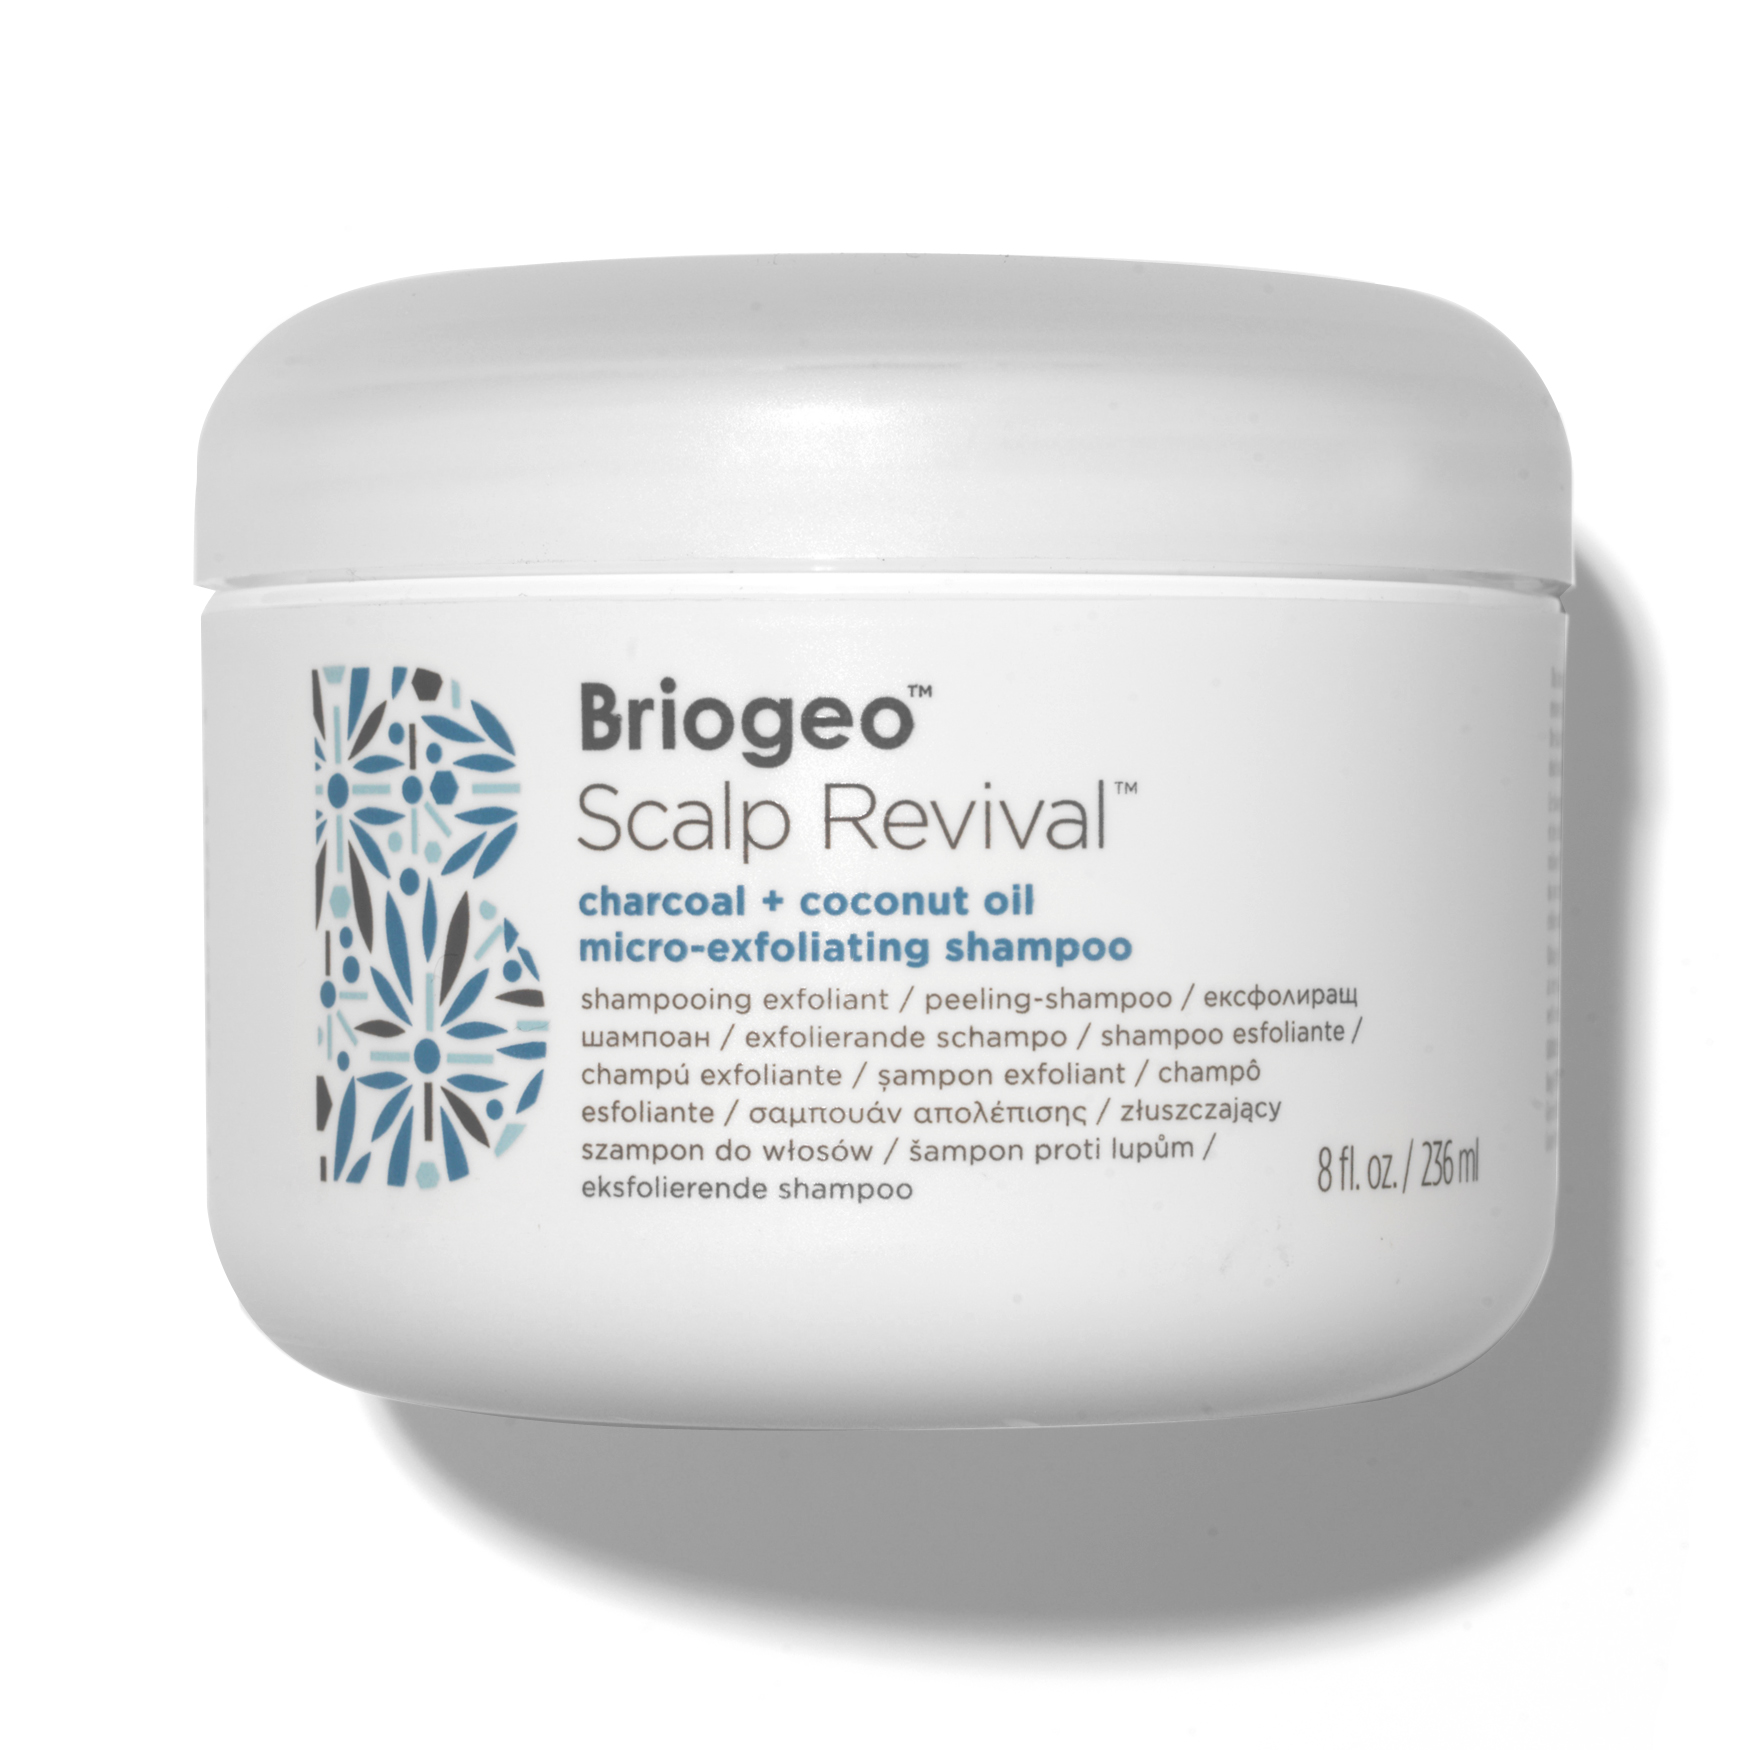 Briogeo Scalp Revival Charcoal + Oil Micro-Exfoliating Shampoo | NK